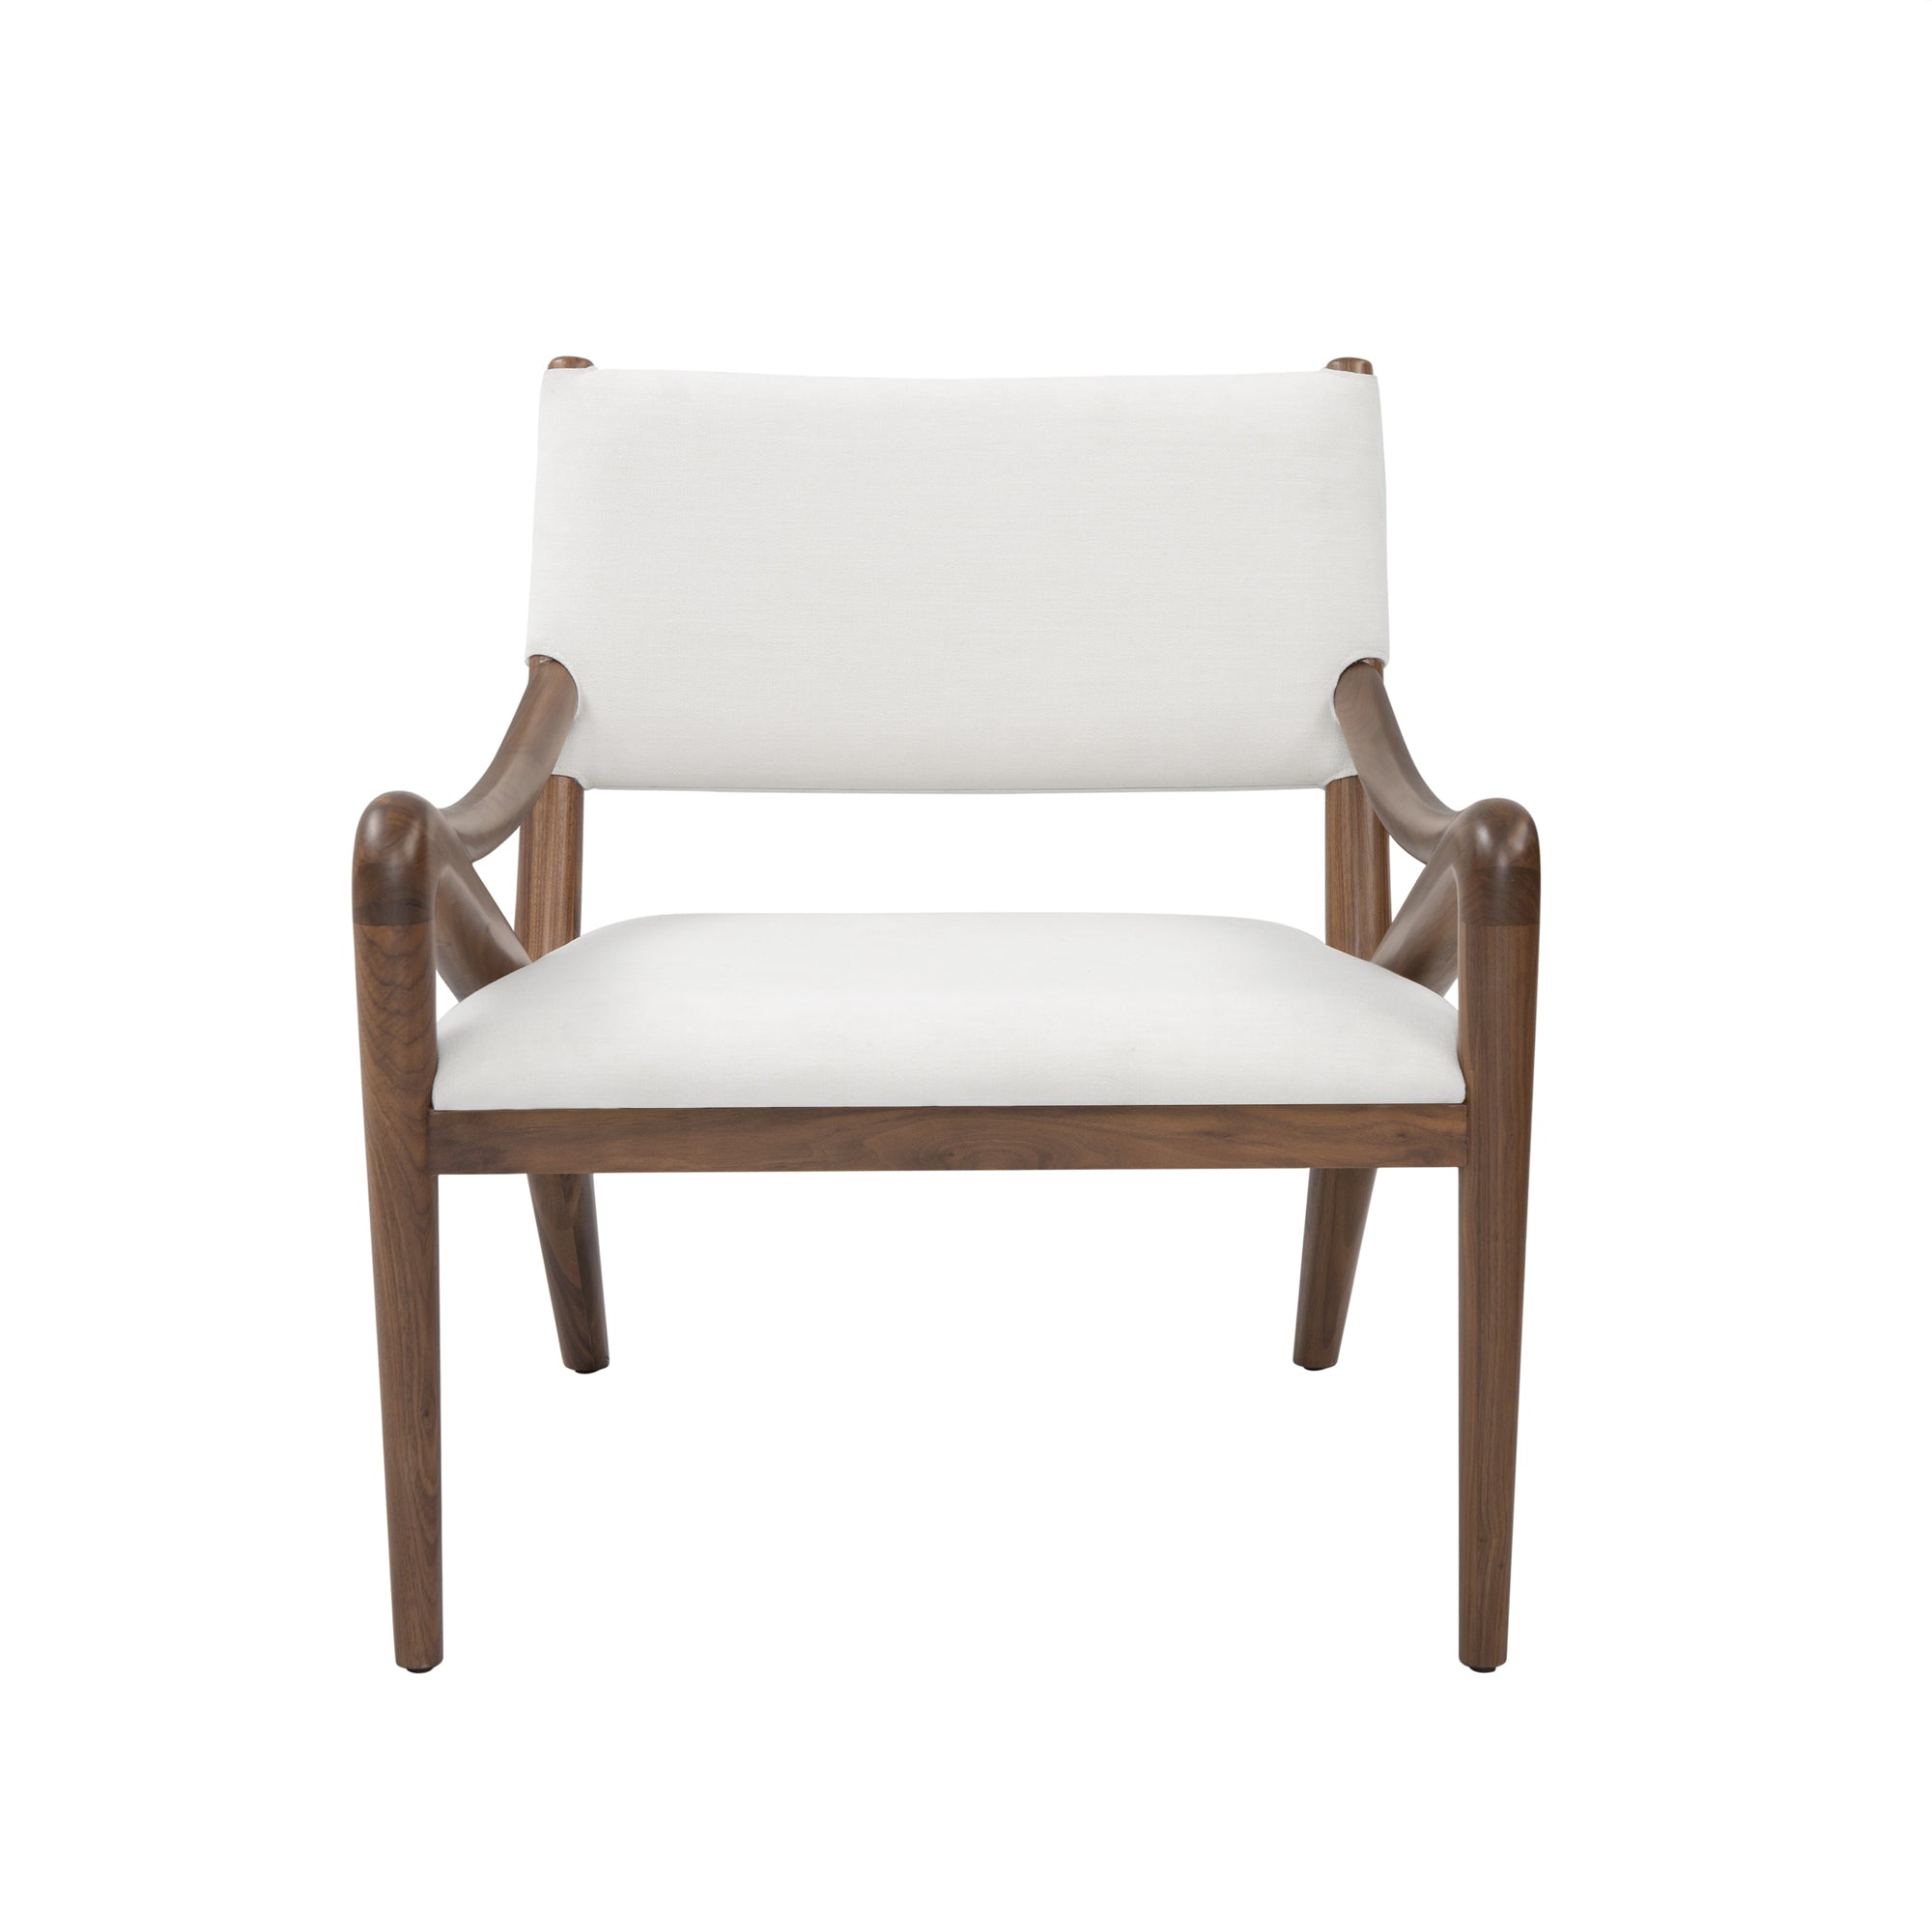 Walnut Crombie Armchair – Walnut Frame With Sand White Upholstery